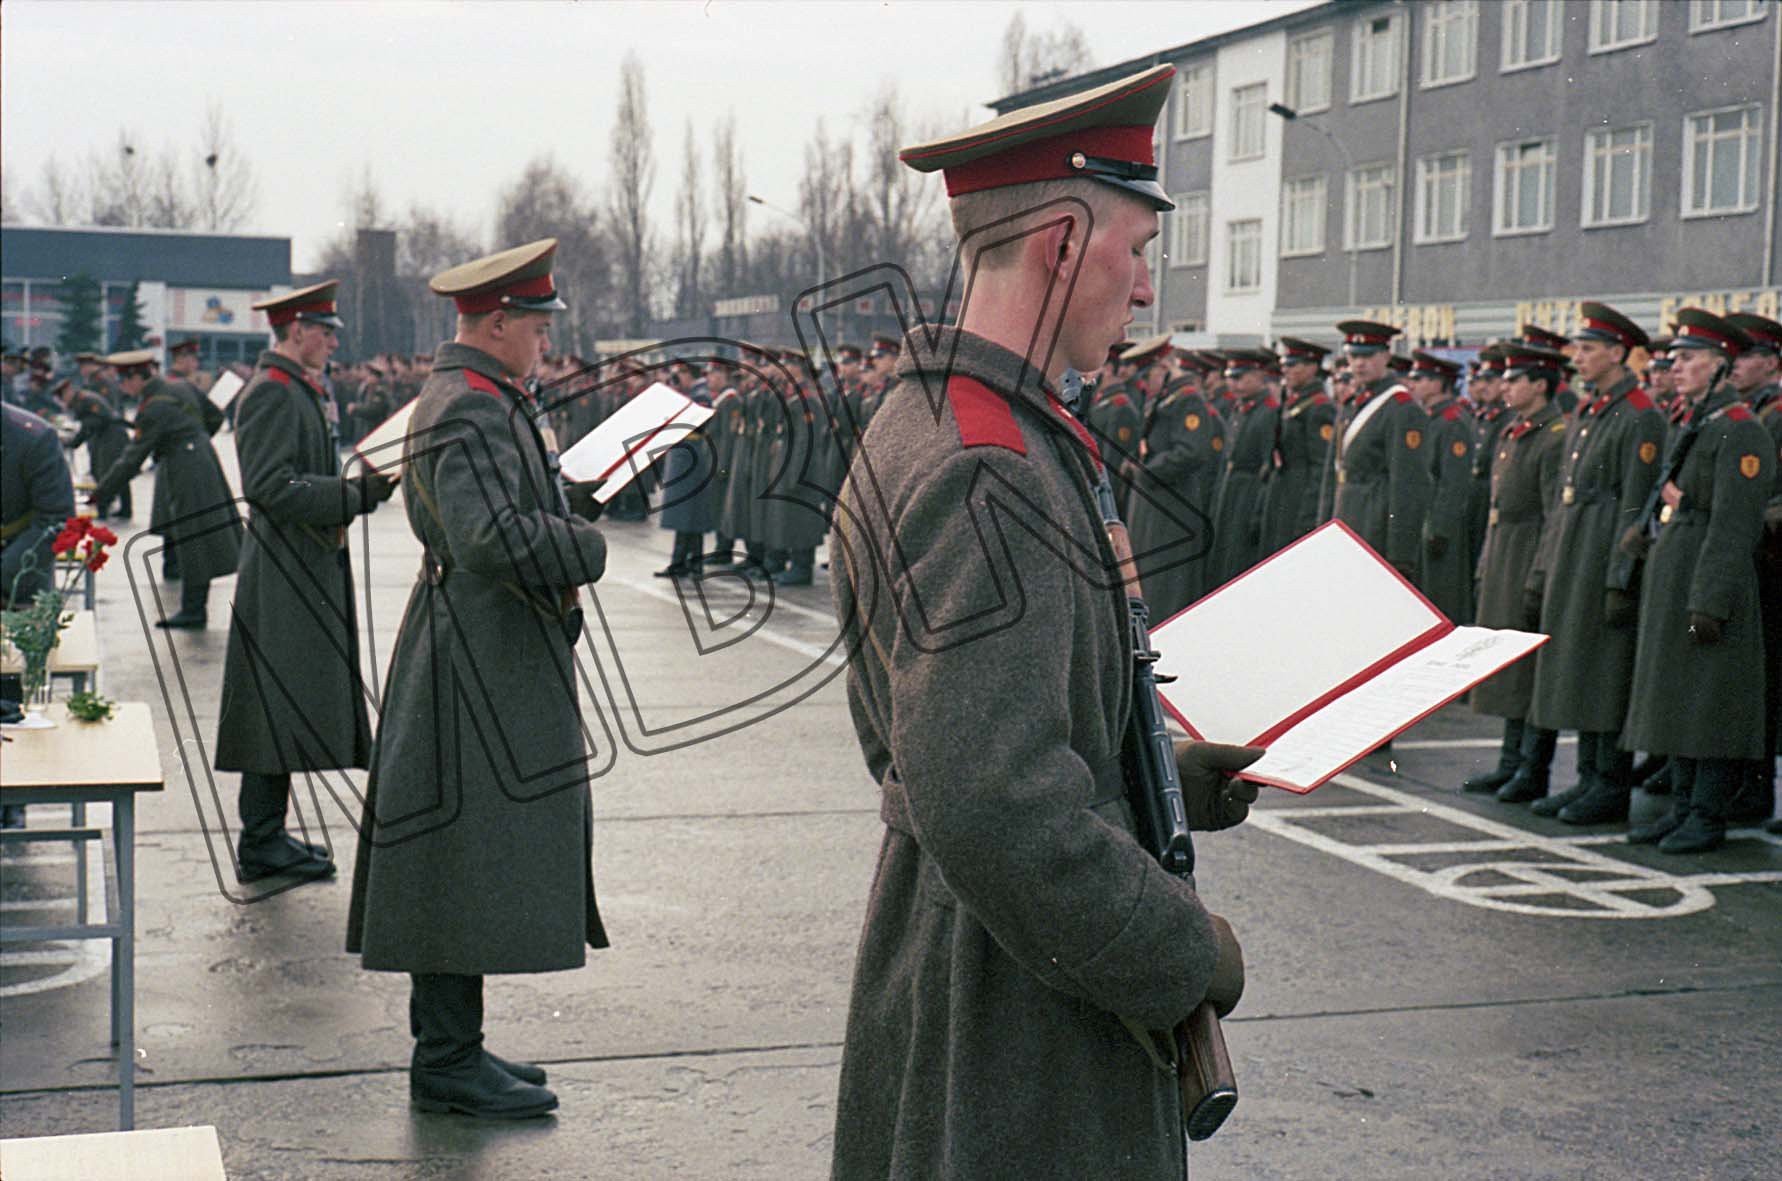 Fotografie: Vereidigung von Rekruten der Berlin-Brigade, Berlin-Karlshorst, Dezember 1993 (Museum Berlin-Karlshorst RR-P)